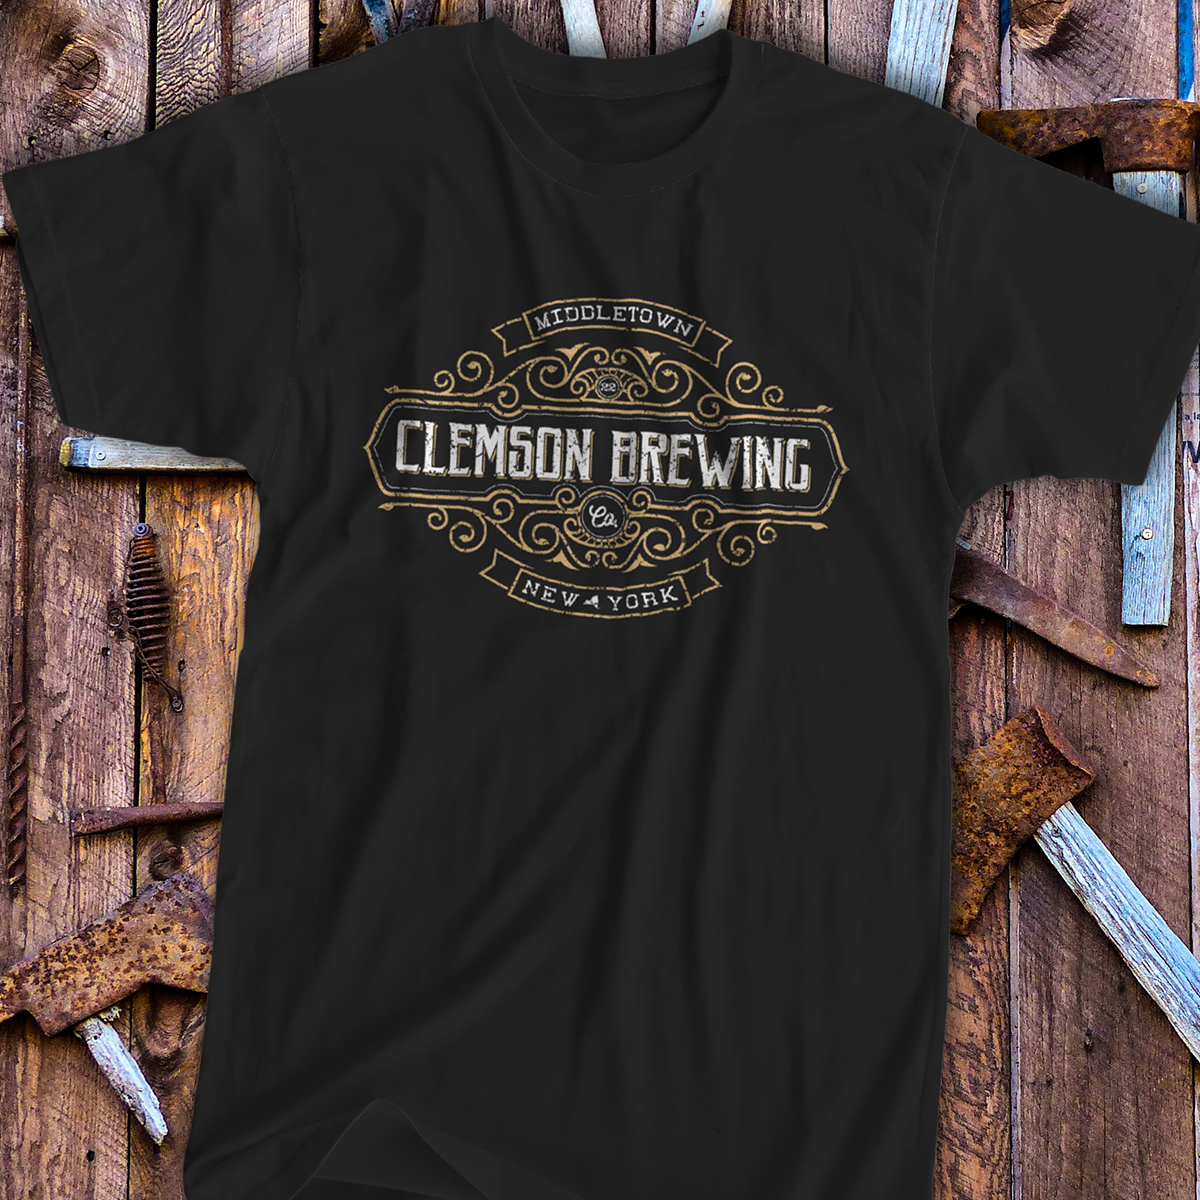 Clemson Bros. Brewery 'Gilded' Tee